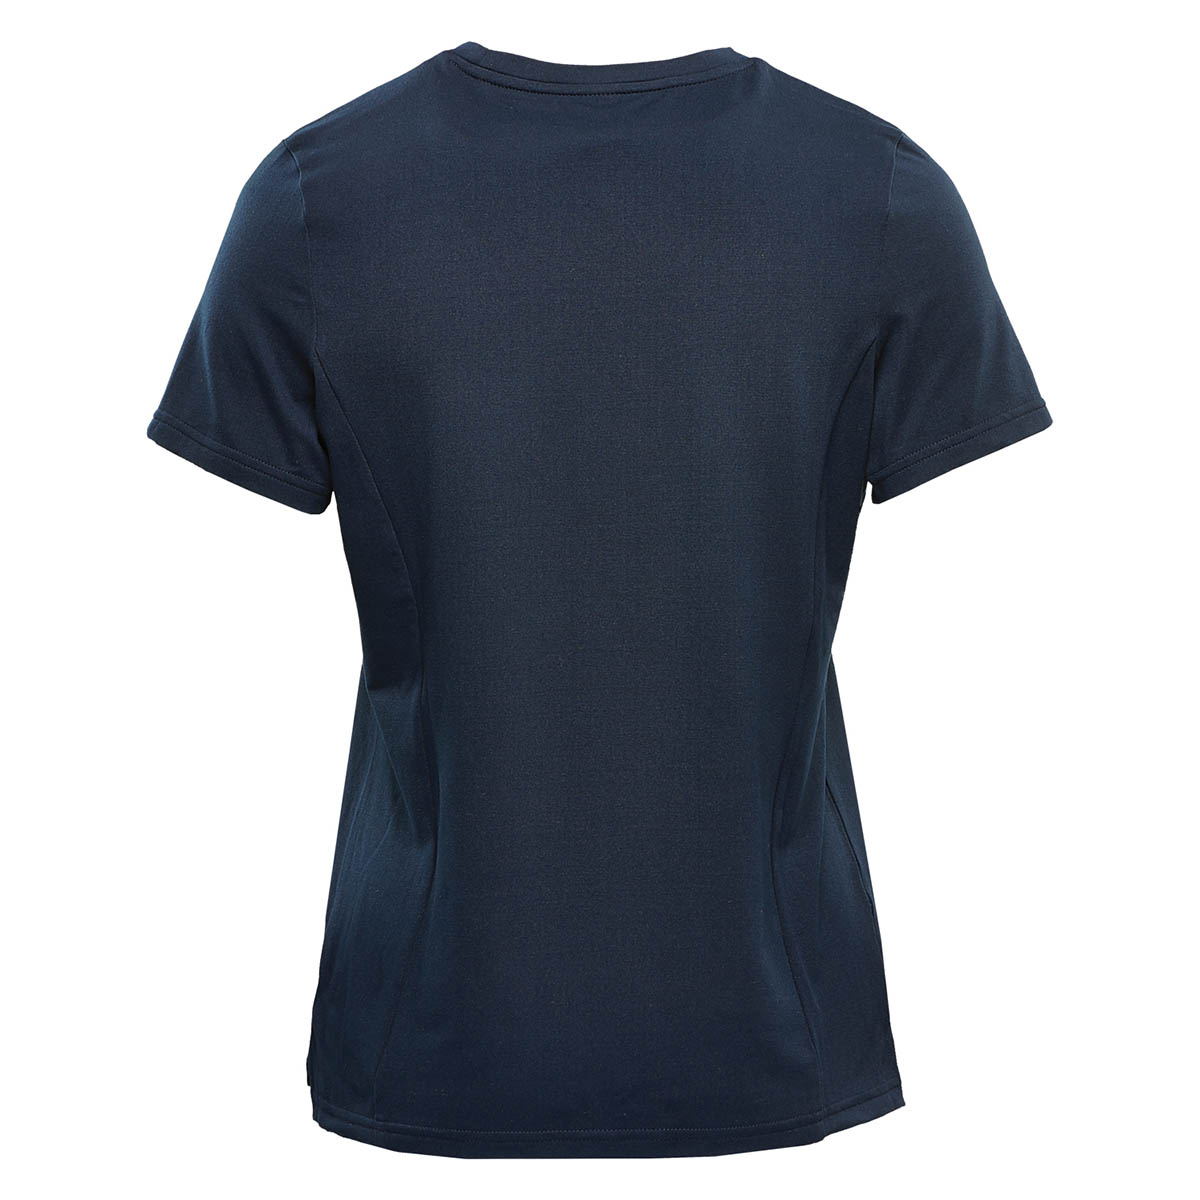 Women's thermal shirt - WK656